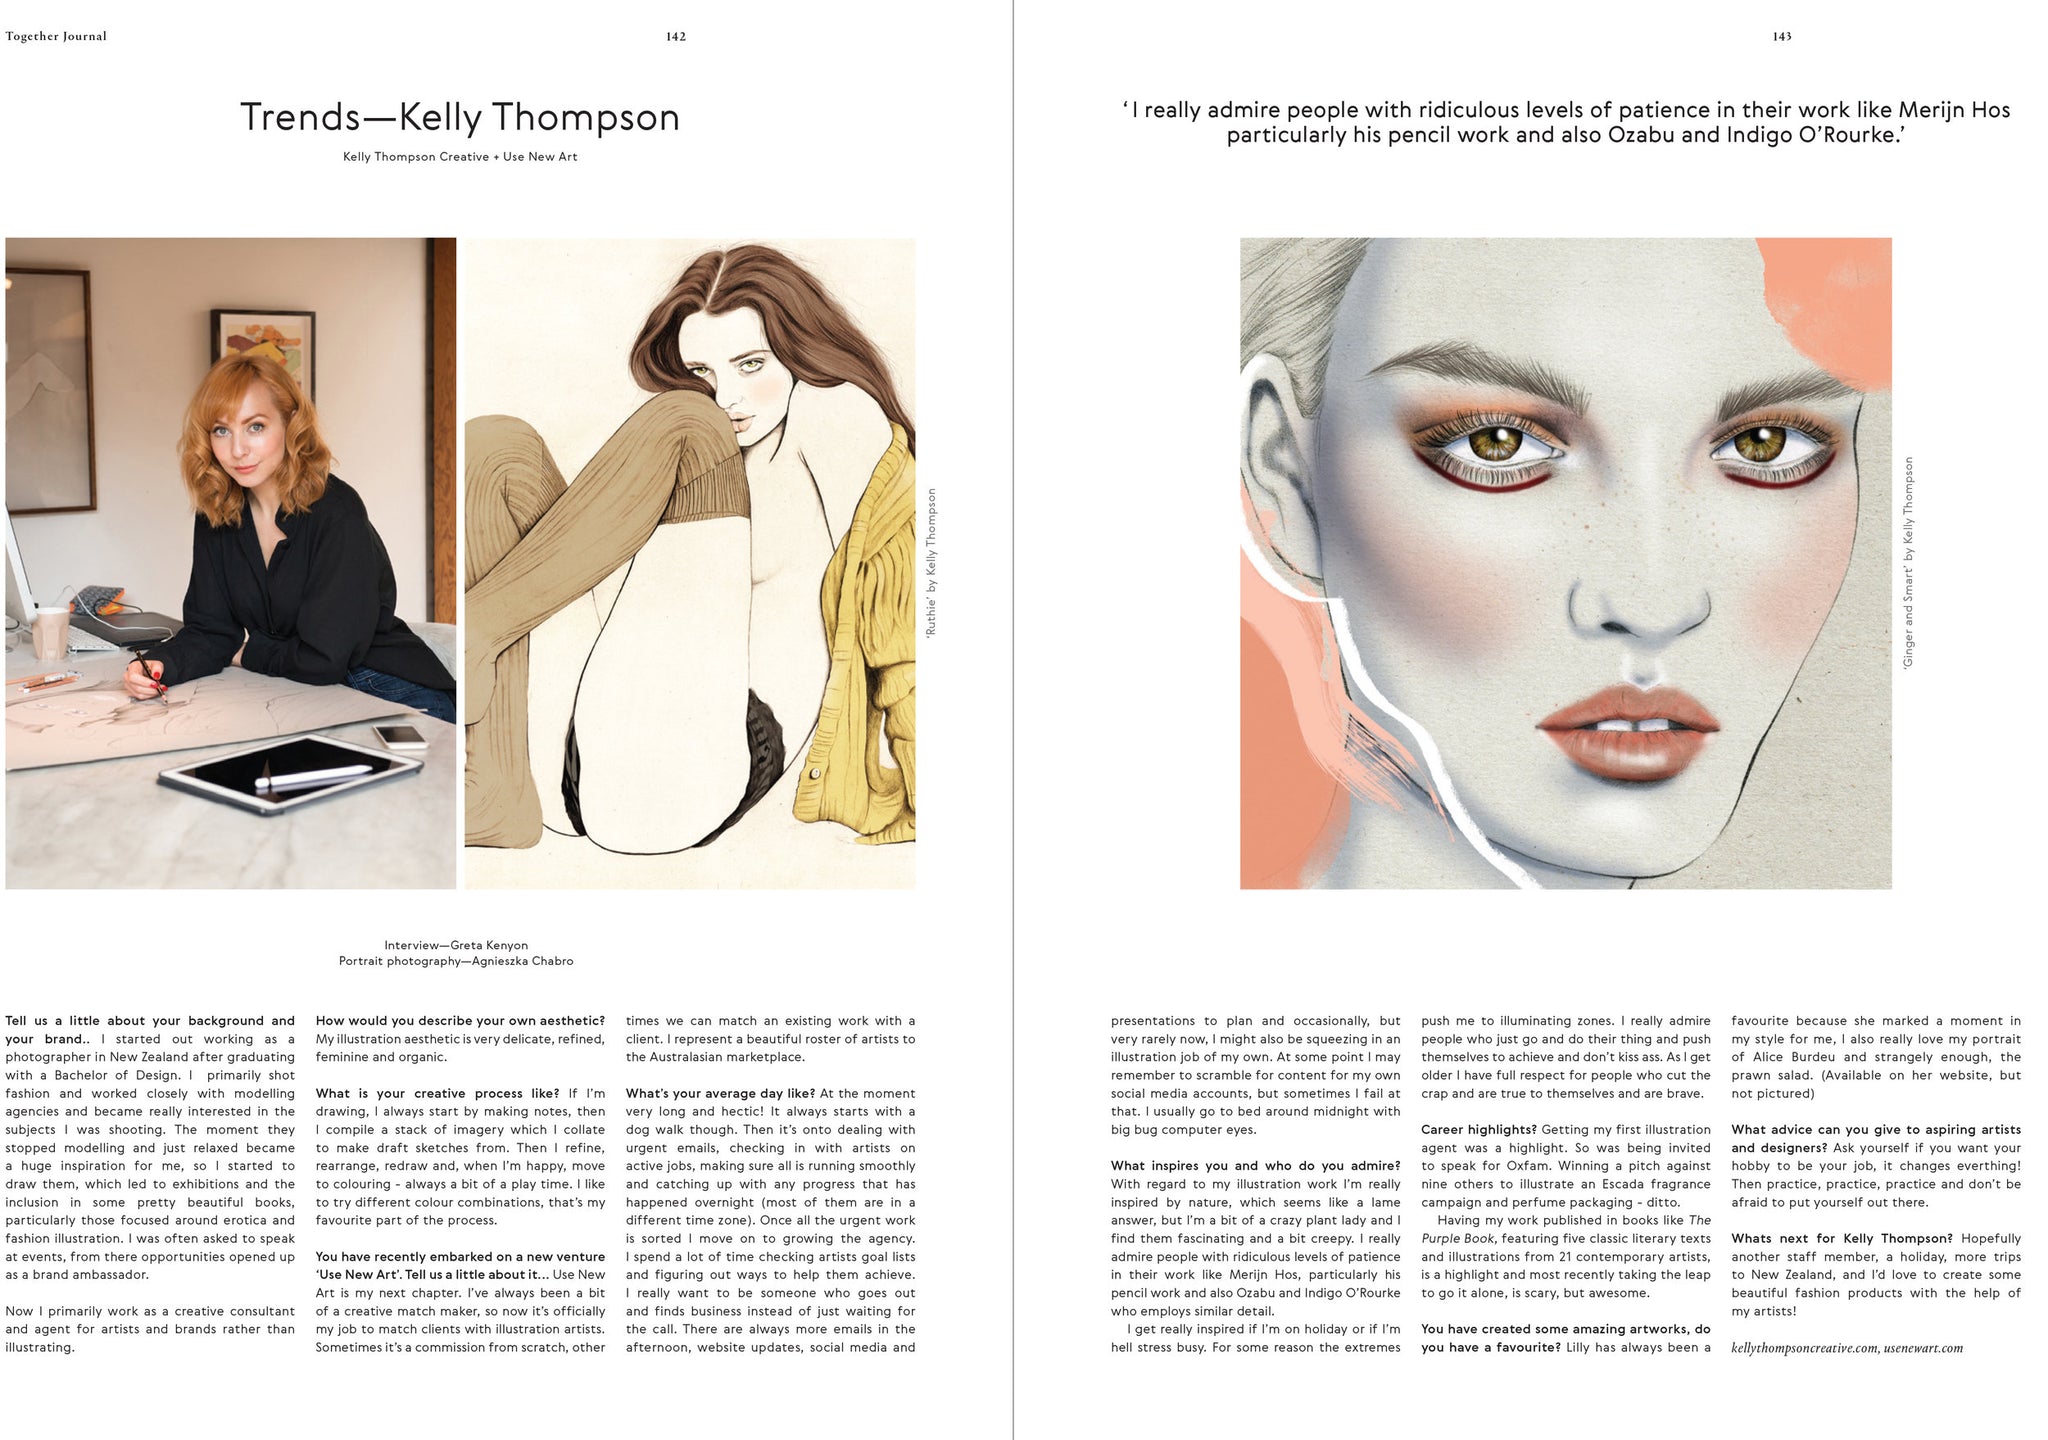 Illustrator Kelly Thompson Together Journal Trends